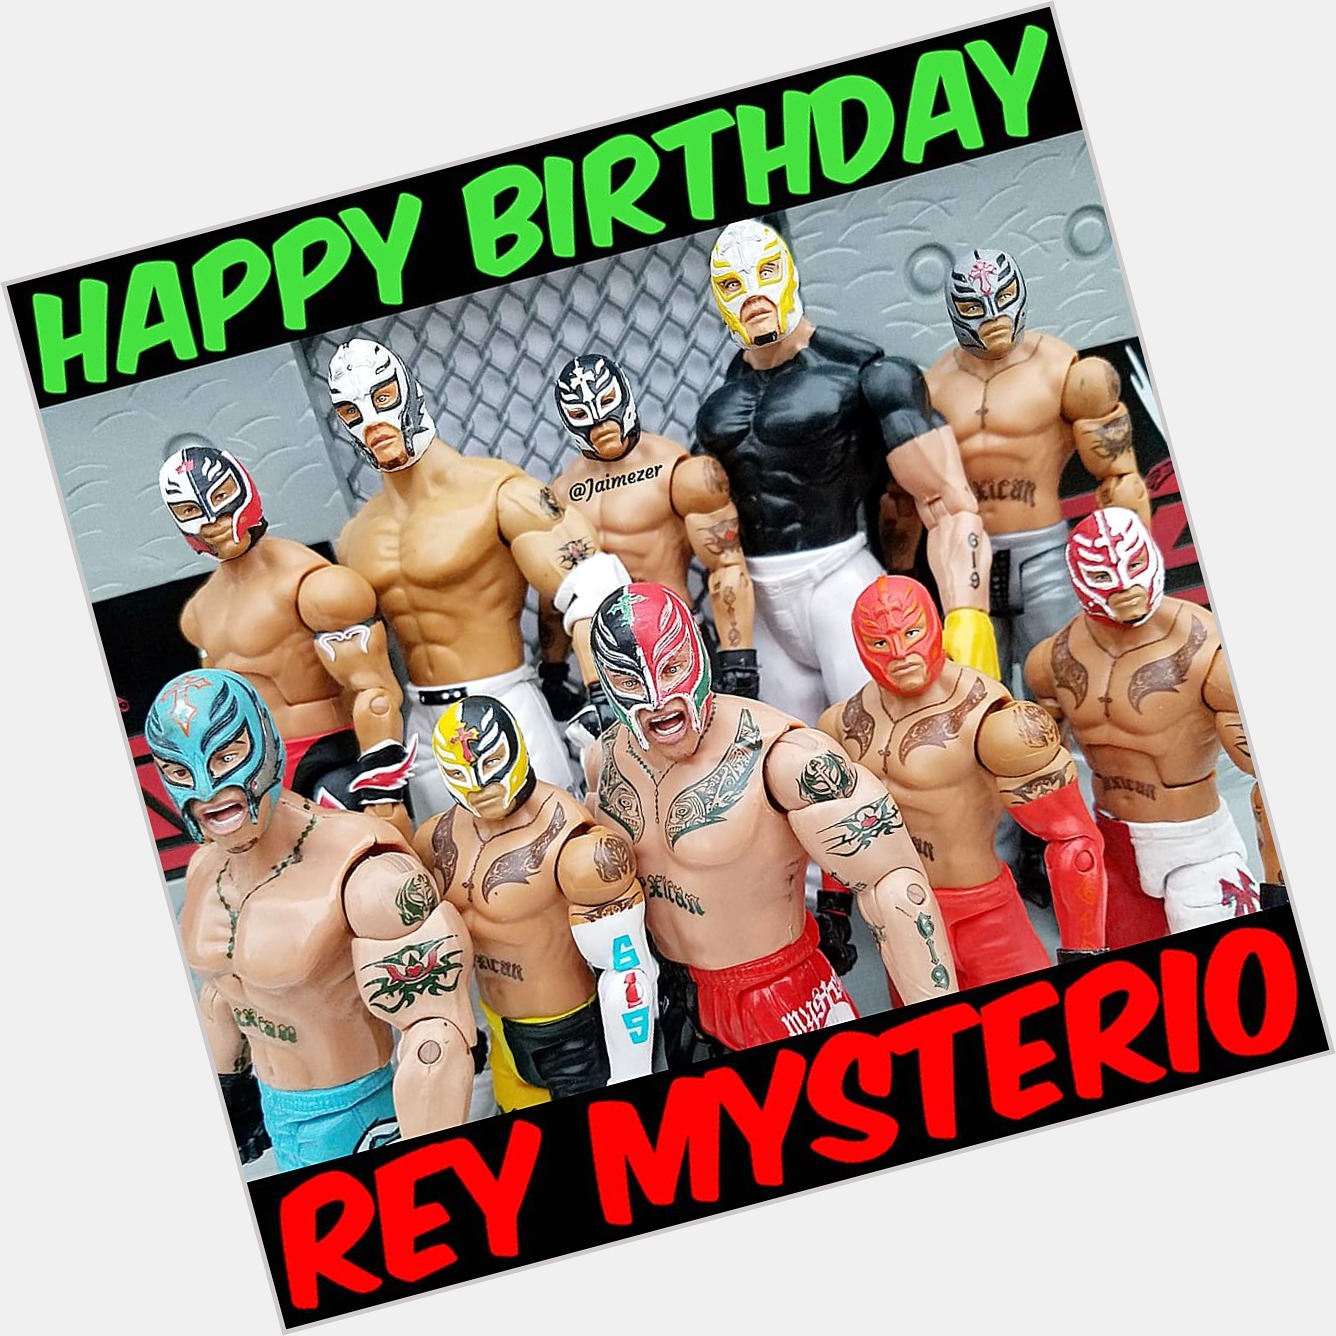 Happy Birthday to the wrestler that got me into wrestling, Rey Mysterio!   